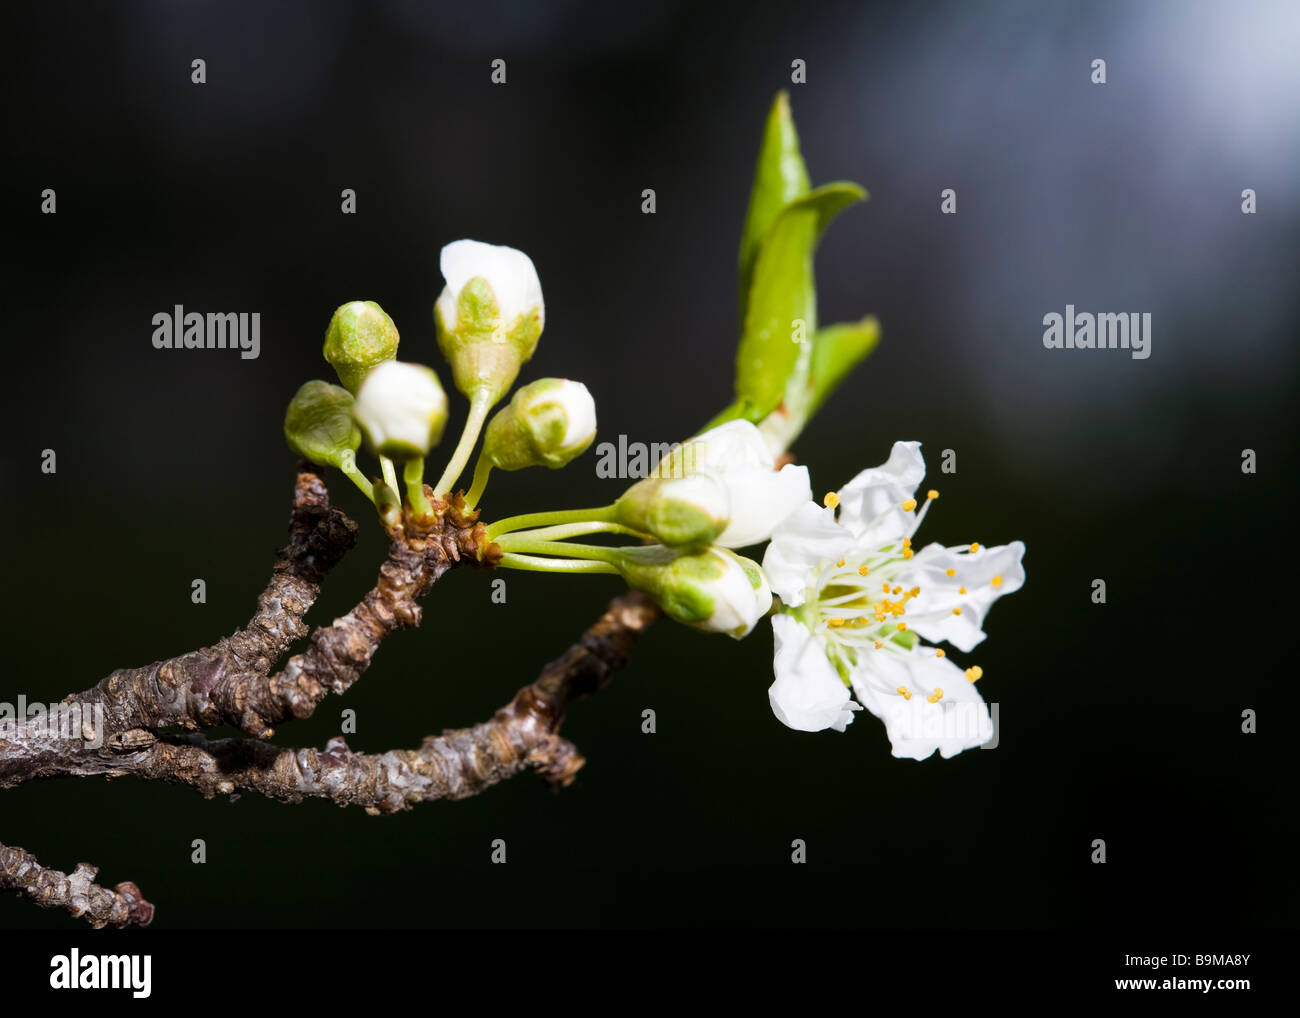 Japanese Plum blossoms (Prunus salicina) Stock Photo